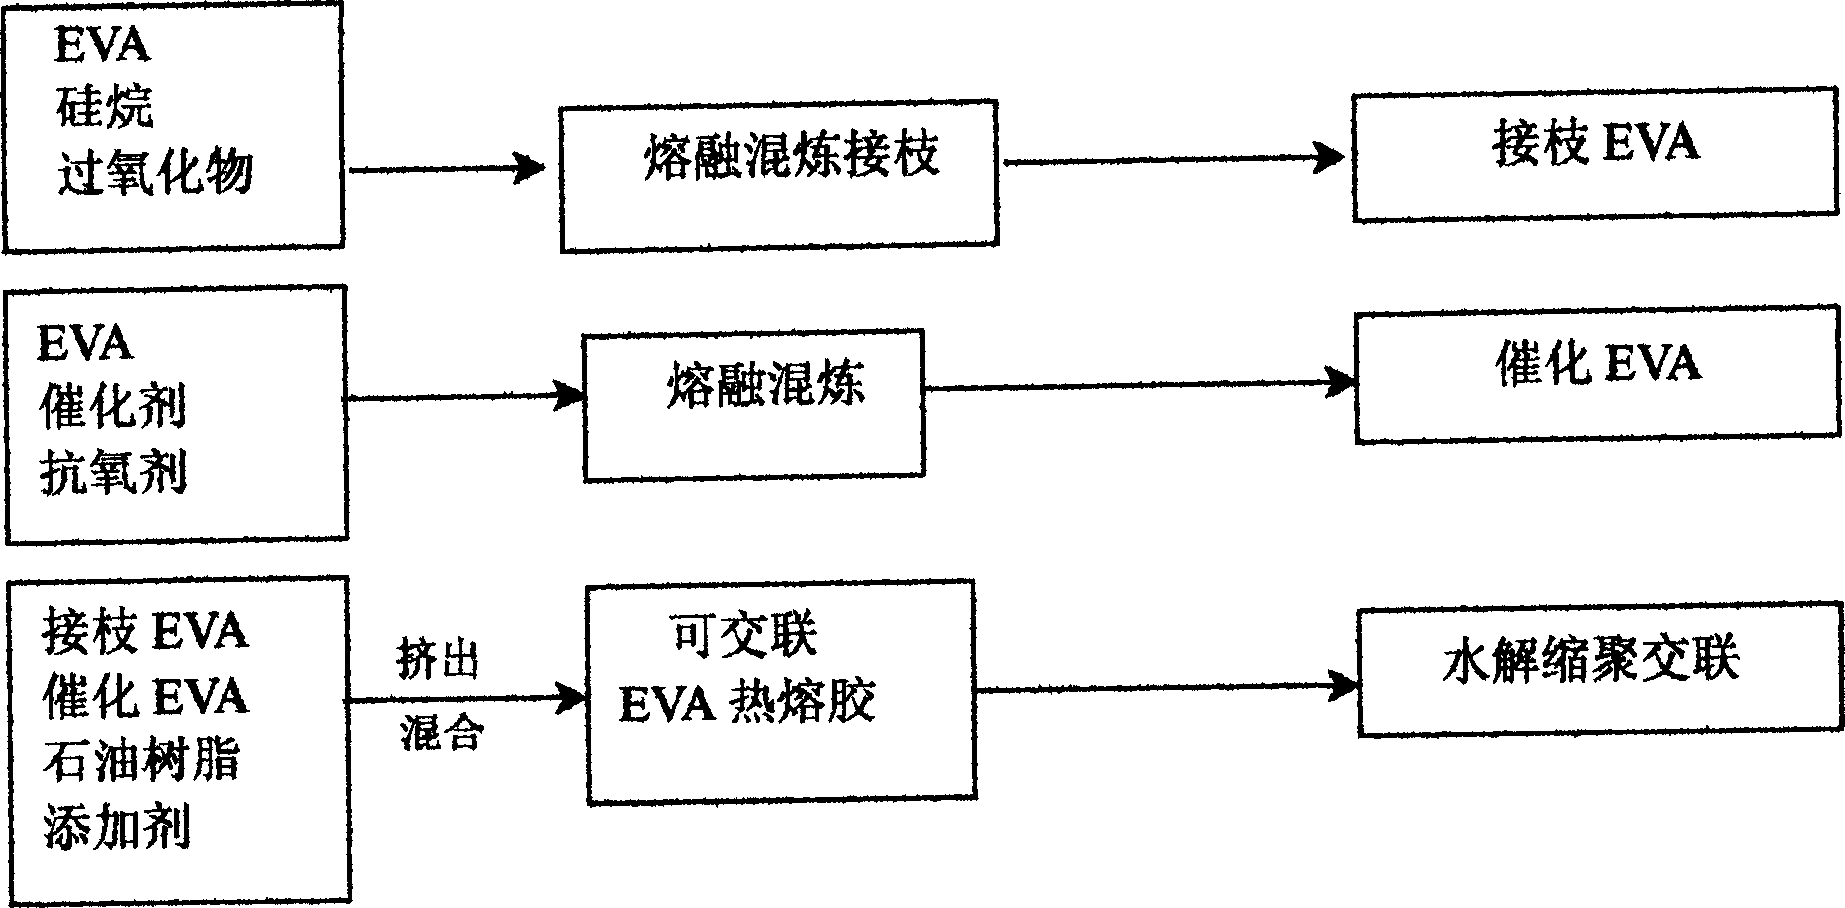 Preparation of silane modified EVA hot-melt adhesive composition